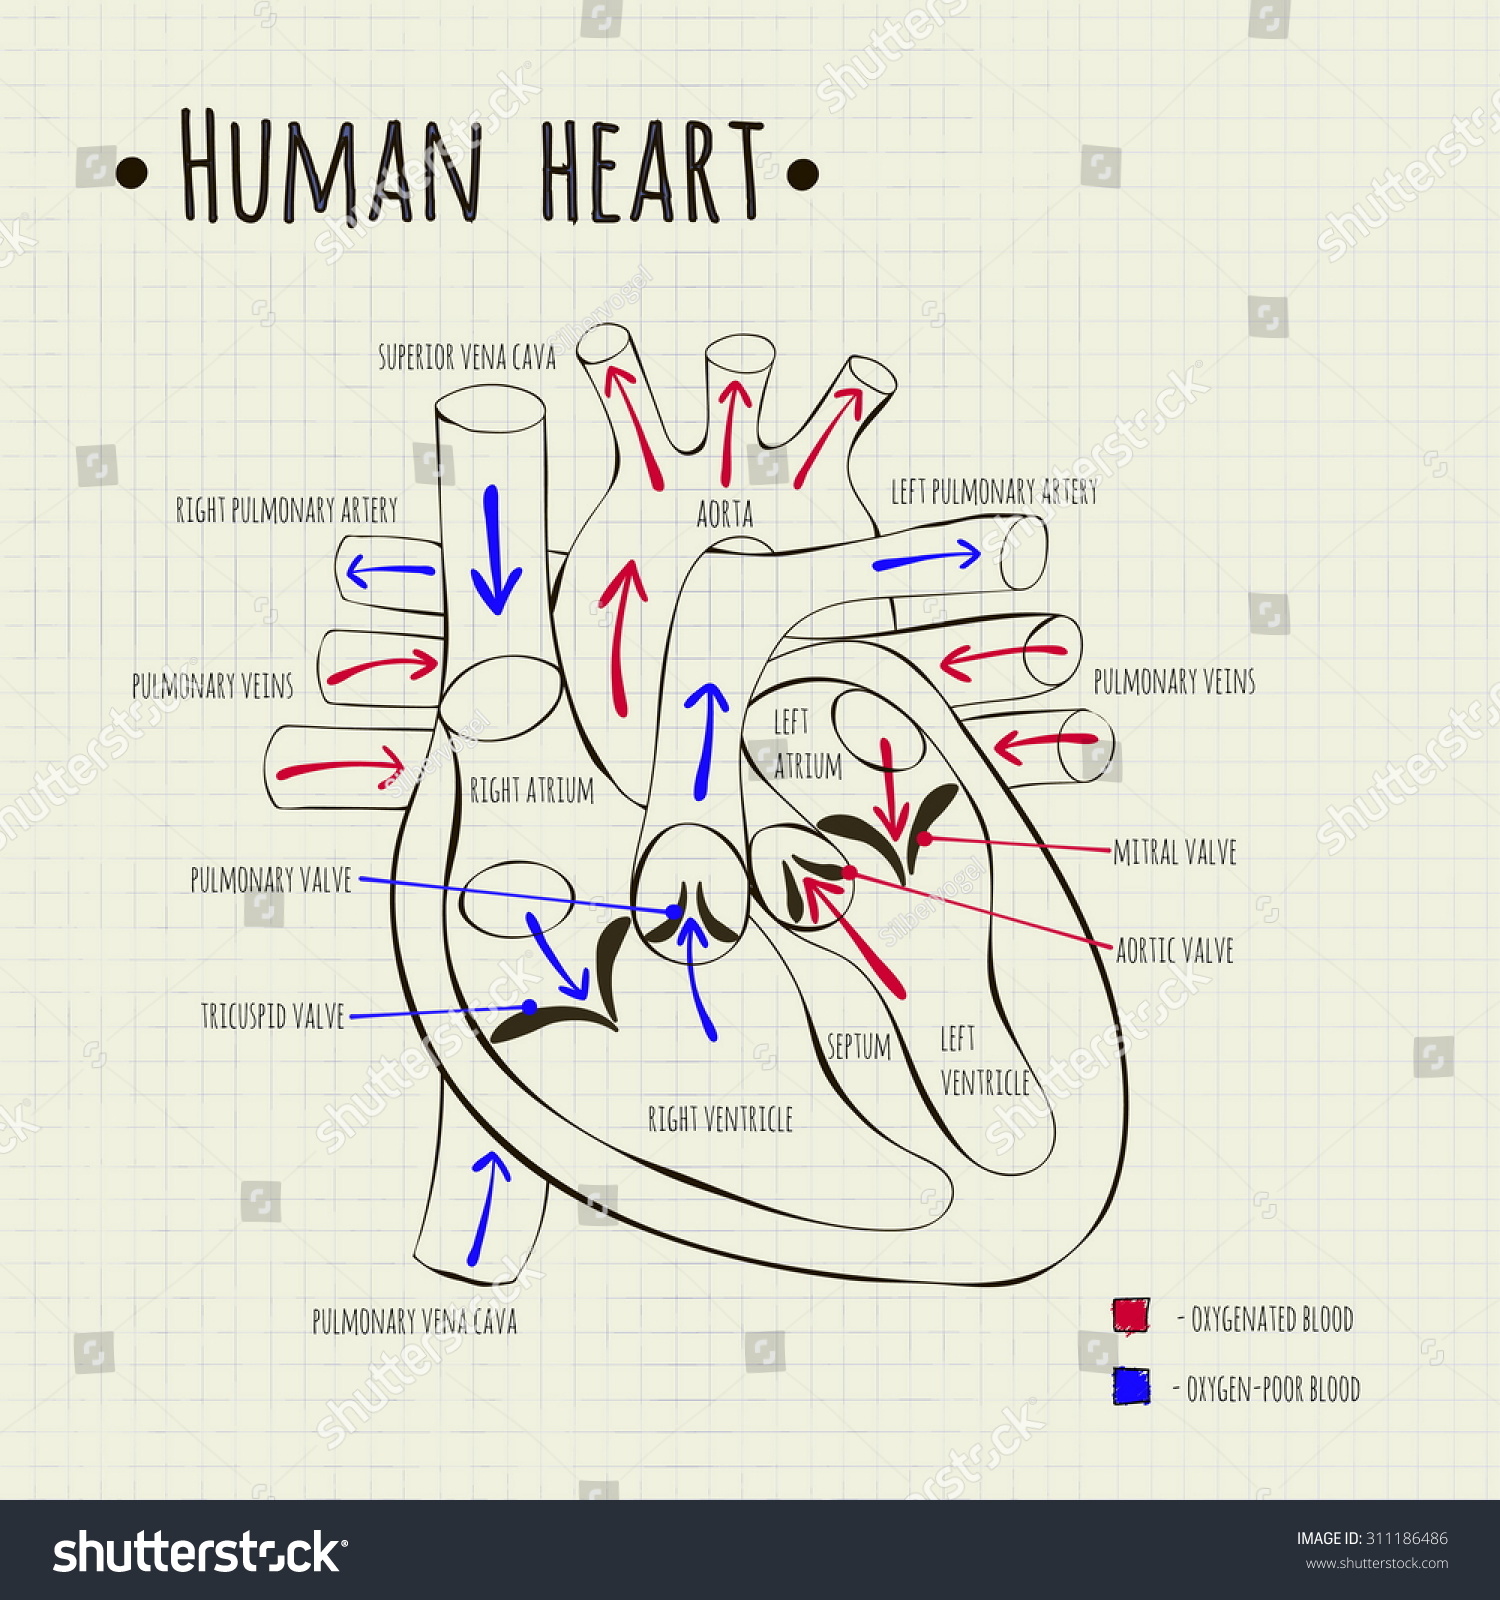 Vector Drawing Of A Human Heart Diagram - 311186486 ...